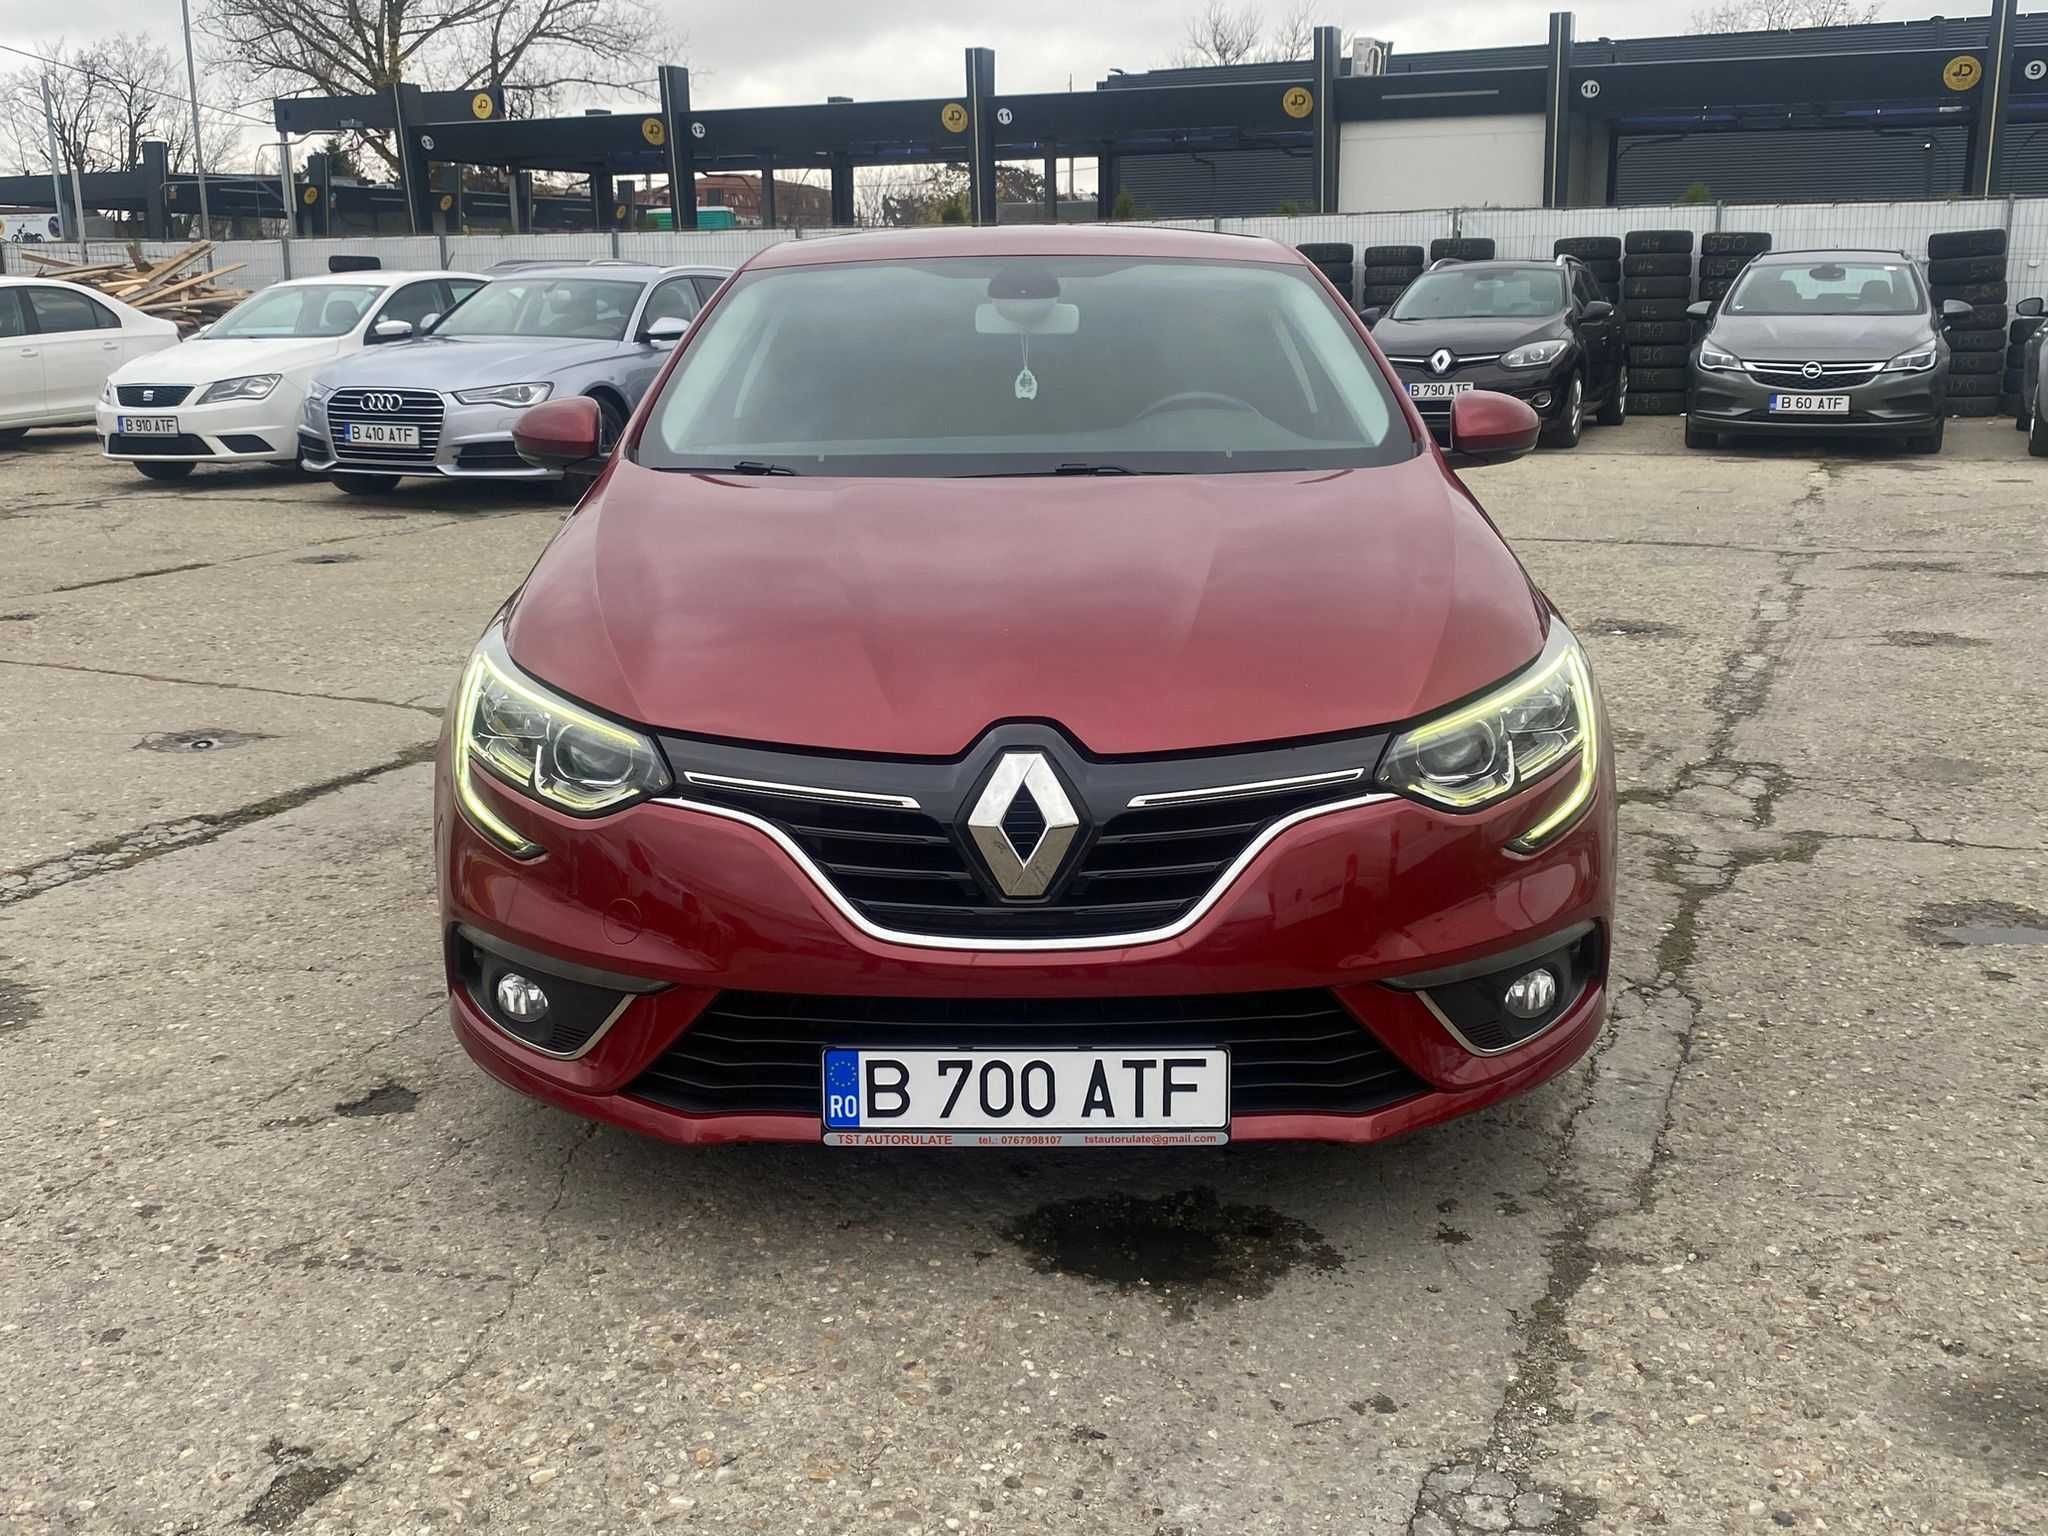 INCHIRIERI AUTO. BUCURESTI.Renault Megane 4 manual incepand cu 21 euro